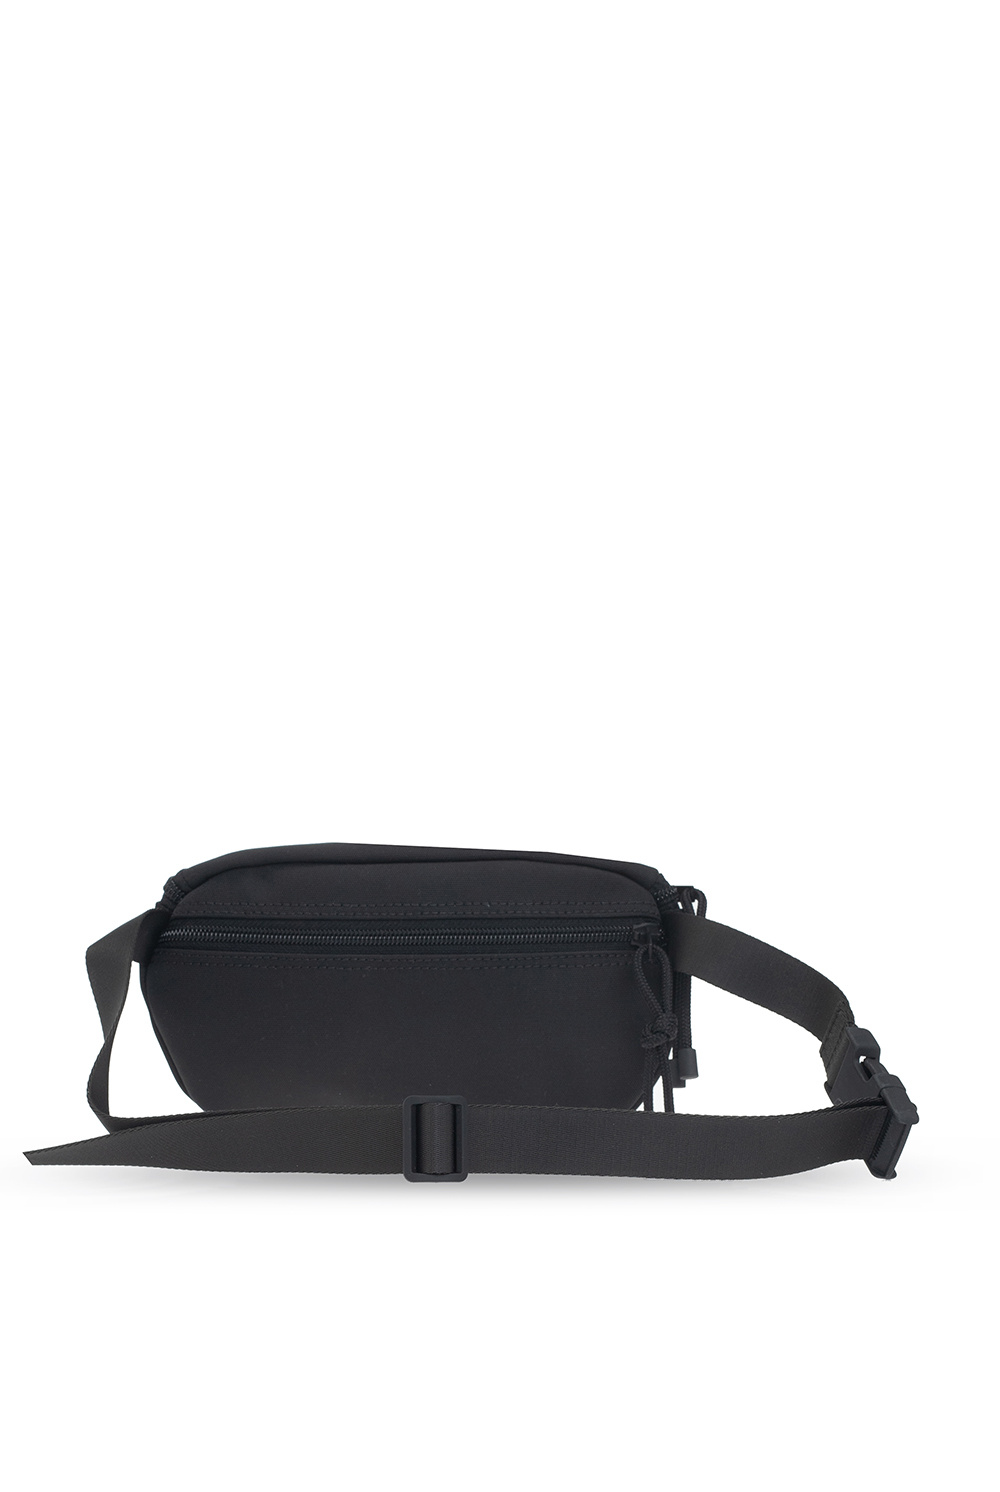 VETEMENTS this mens cotton waist bounds bag has large zippers for a retro effect